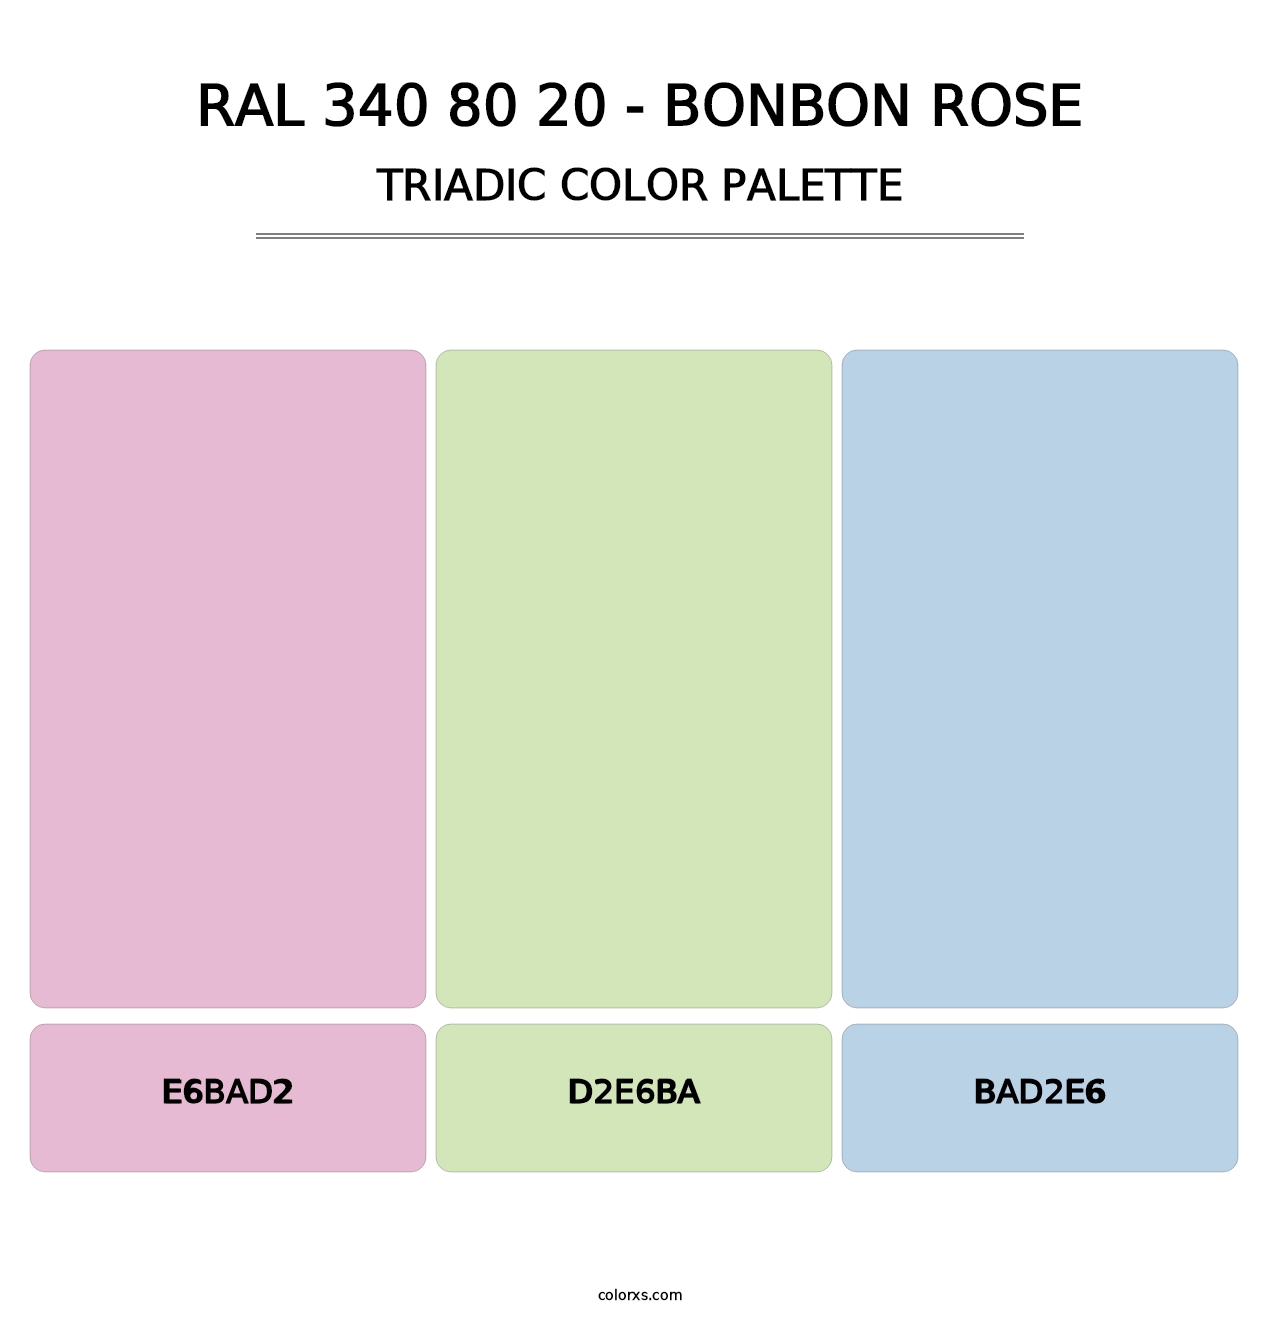 RAL 340 80 20 - Bonbon Rose - Triadic Color Palette